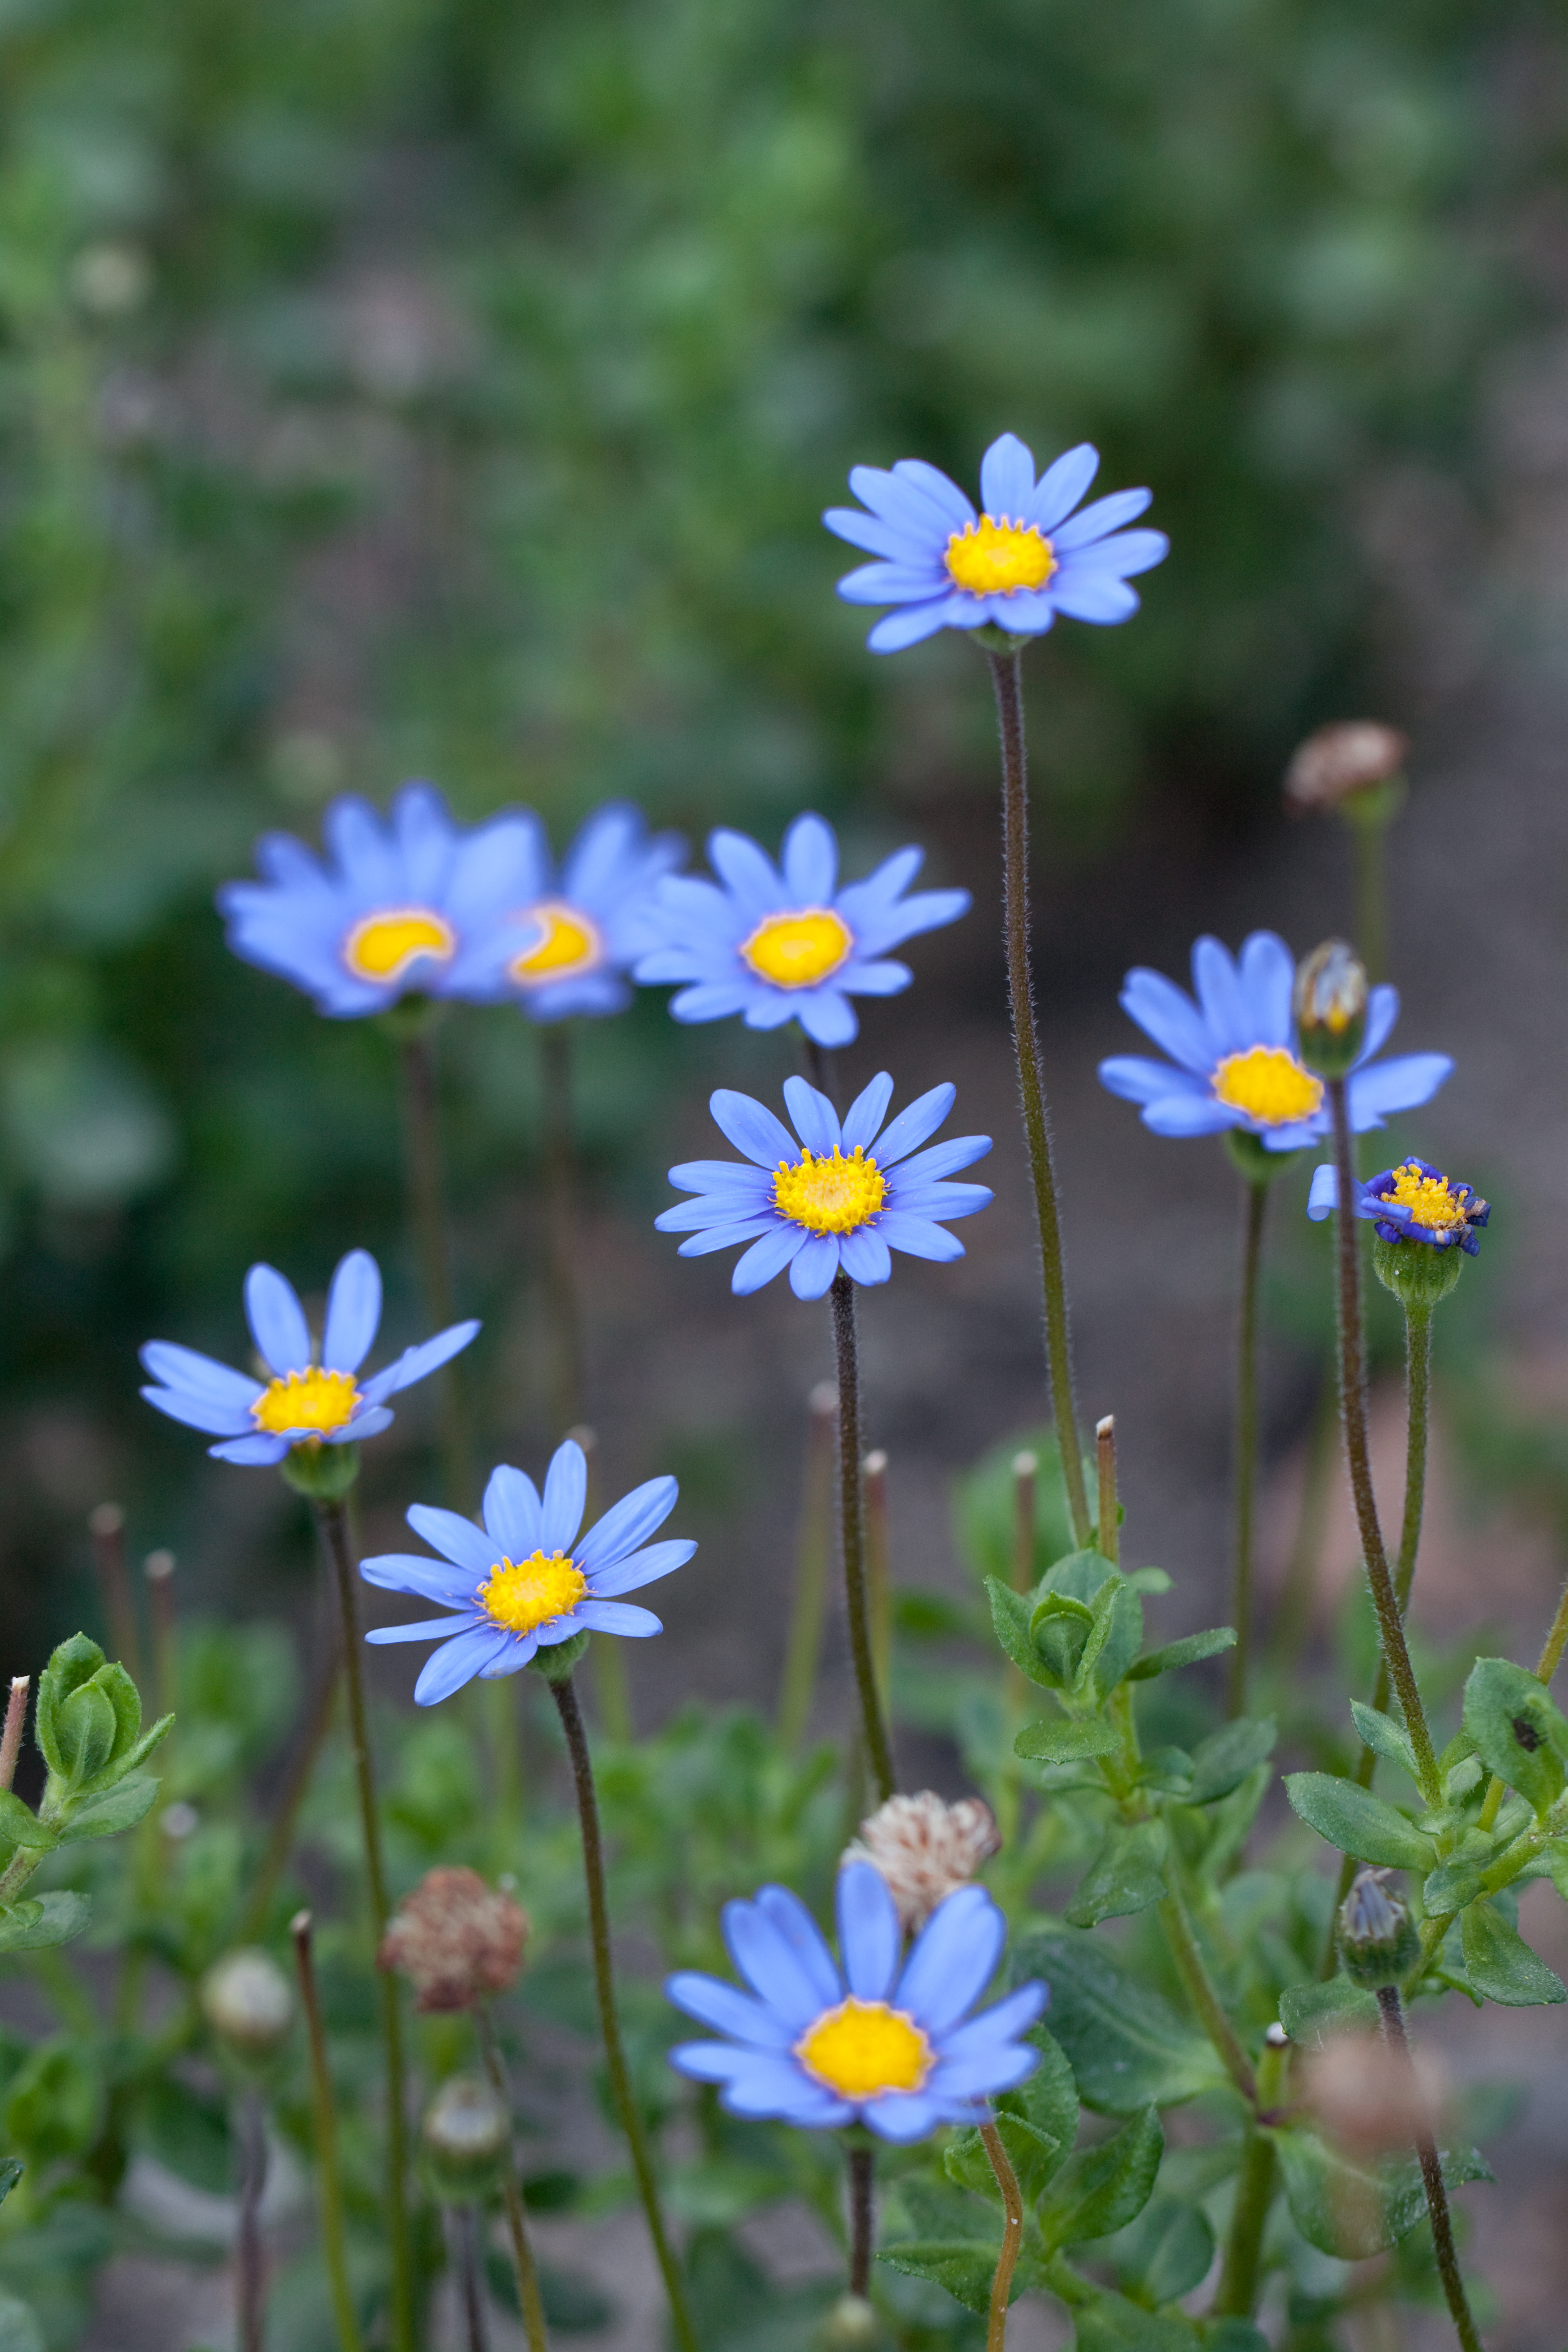 File:Flower, Blue Daisy - Flickr - nekonomania.jpg - Wikimedia Commons